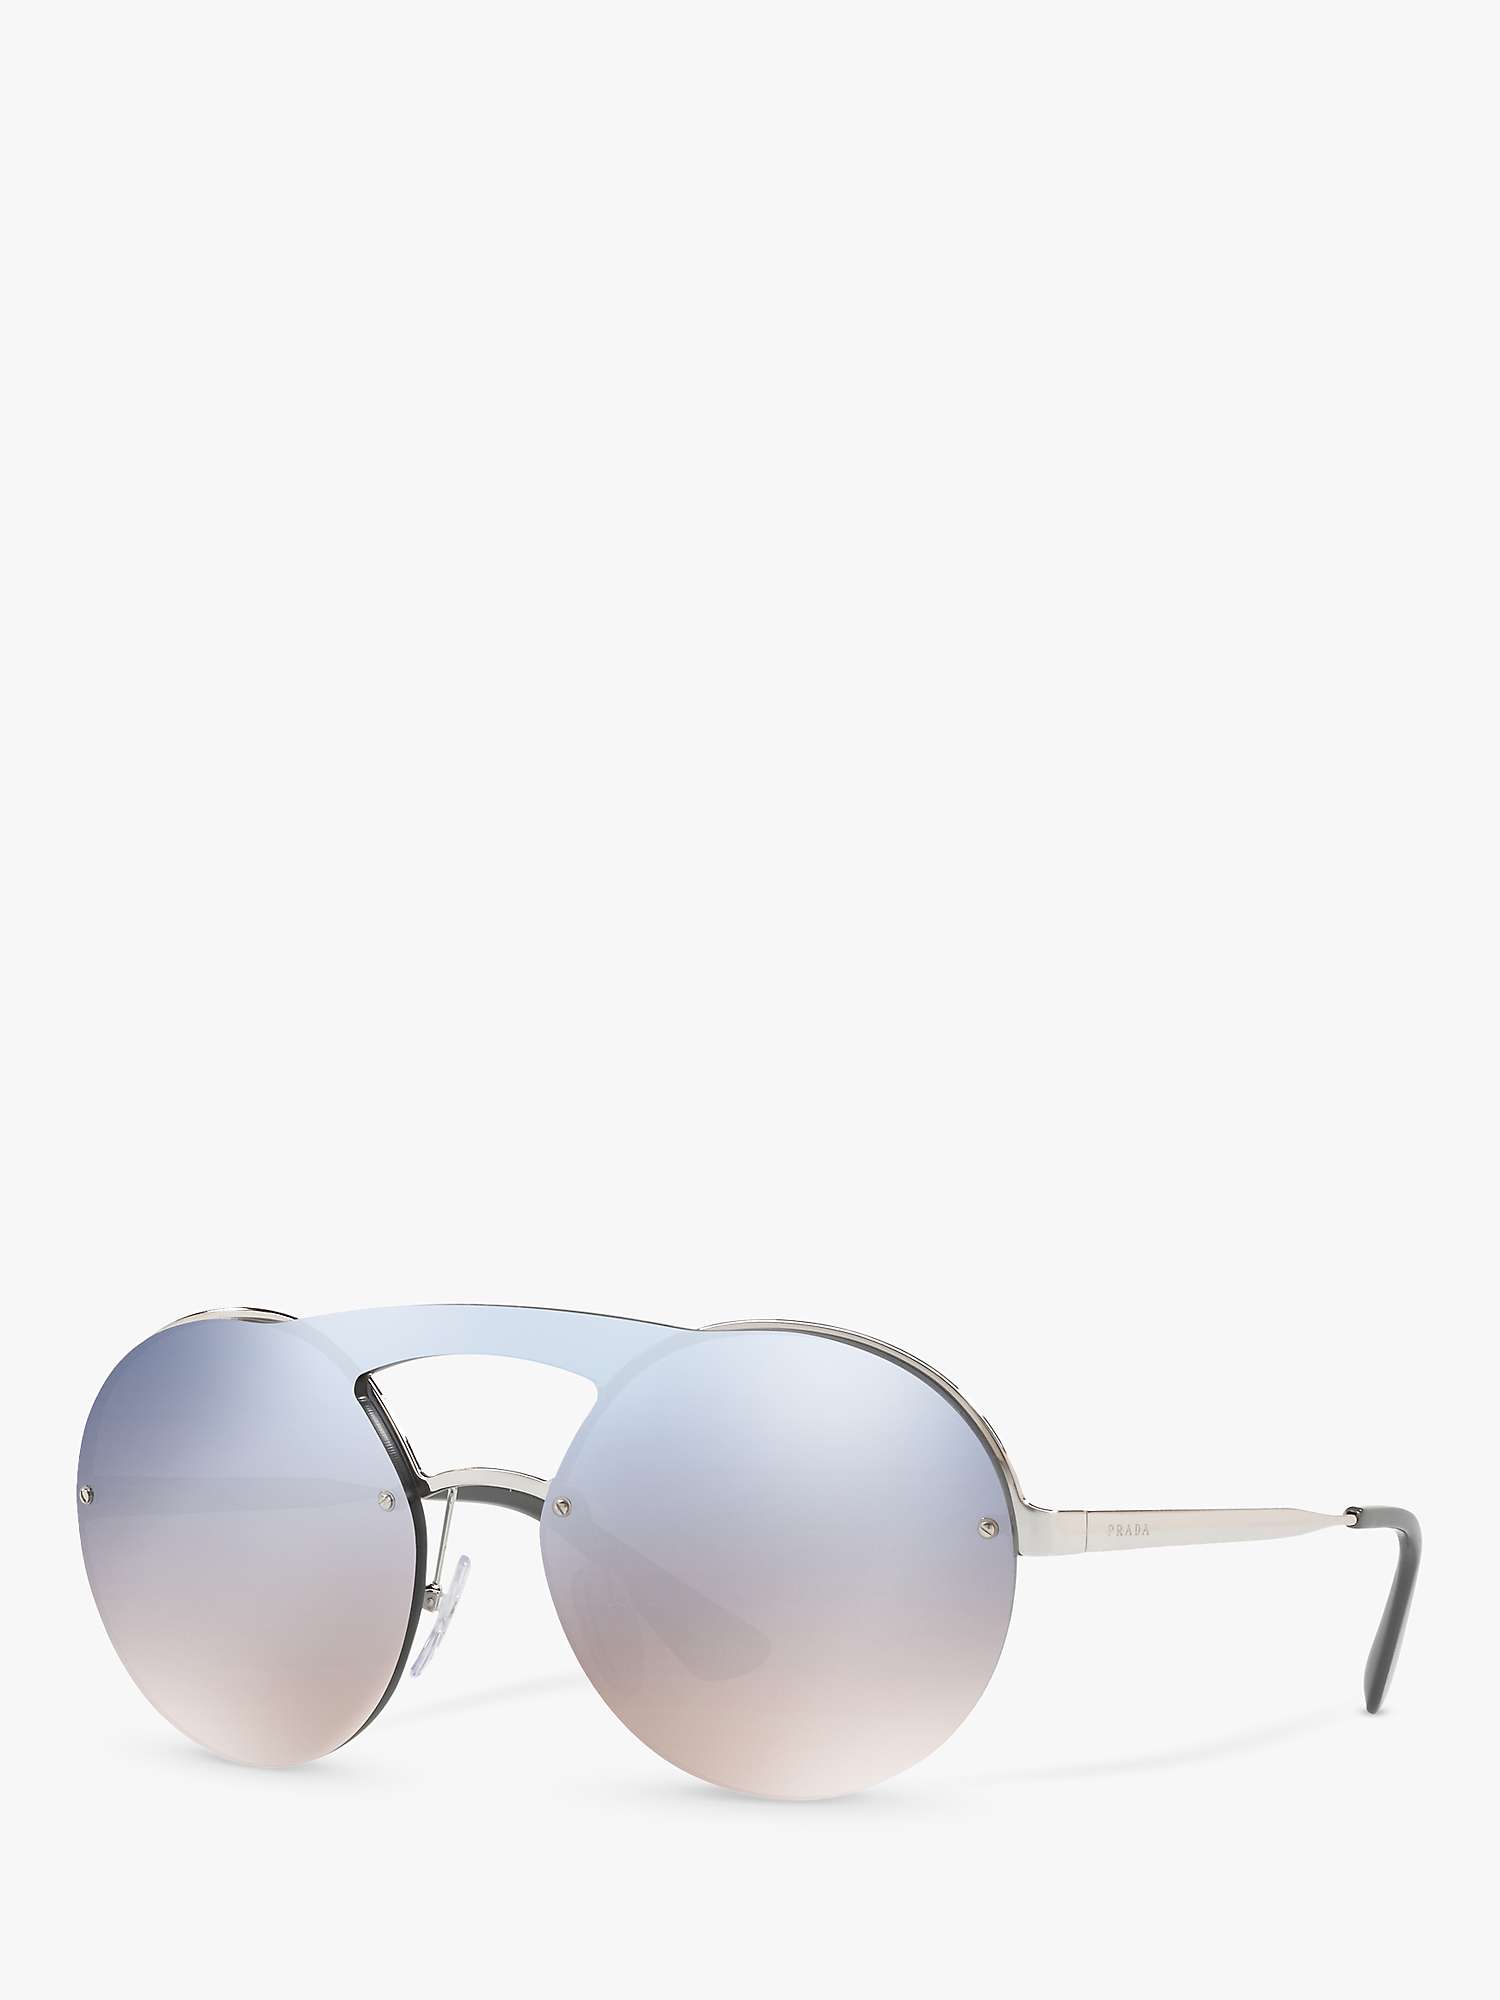 Buy Prada PR 65TS Women's Catwalk Round Sunglasses, Silver/Mirror Blue Online at johnlewis.com